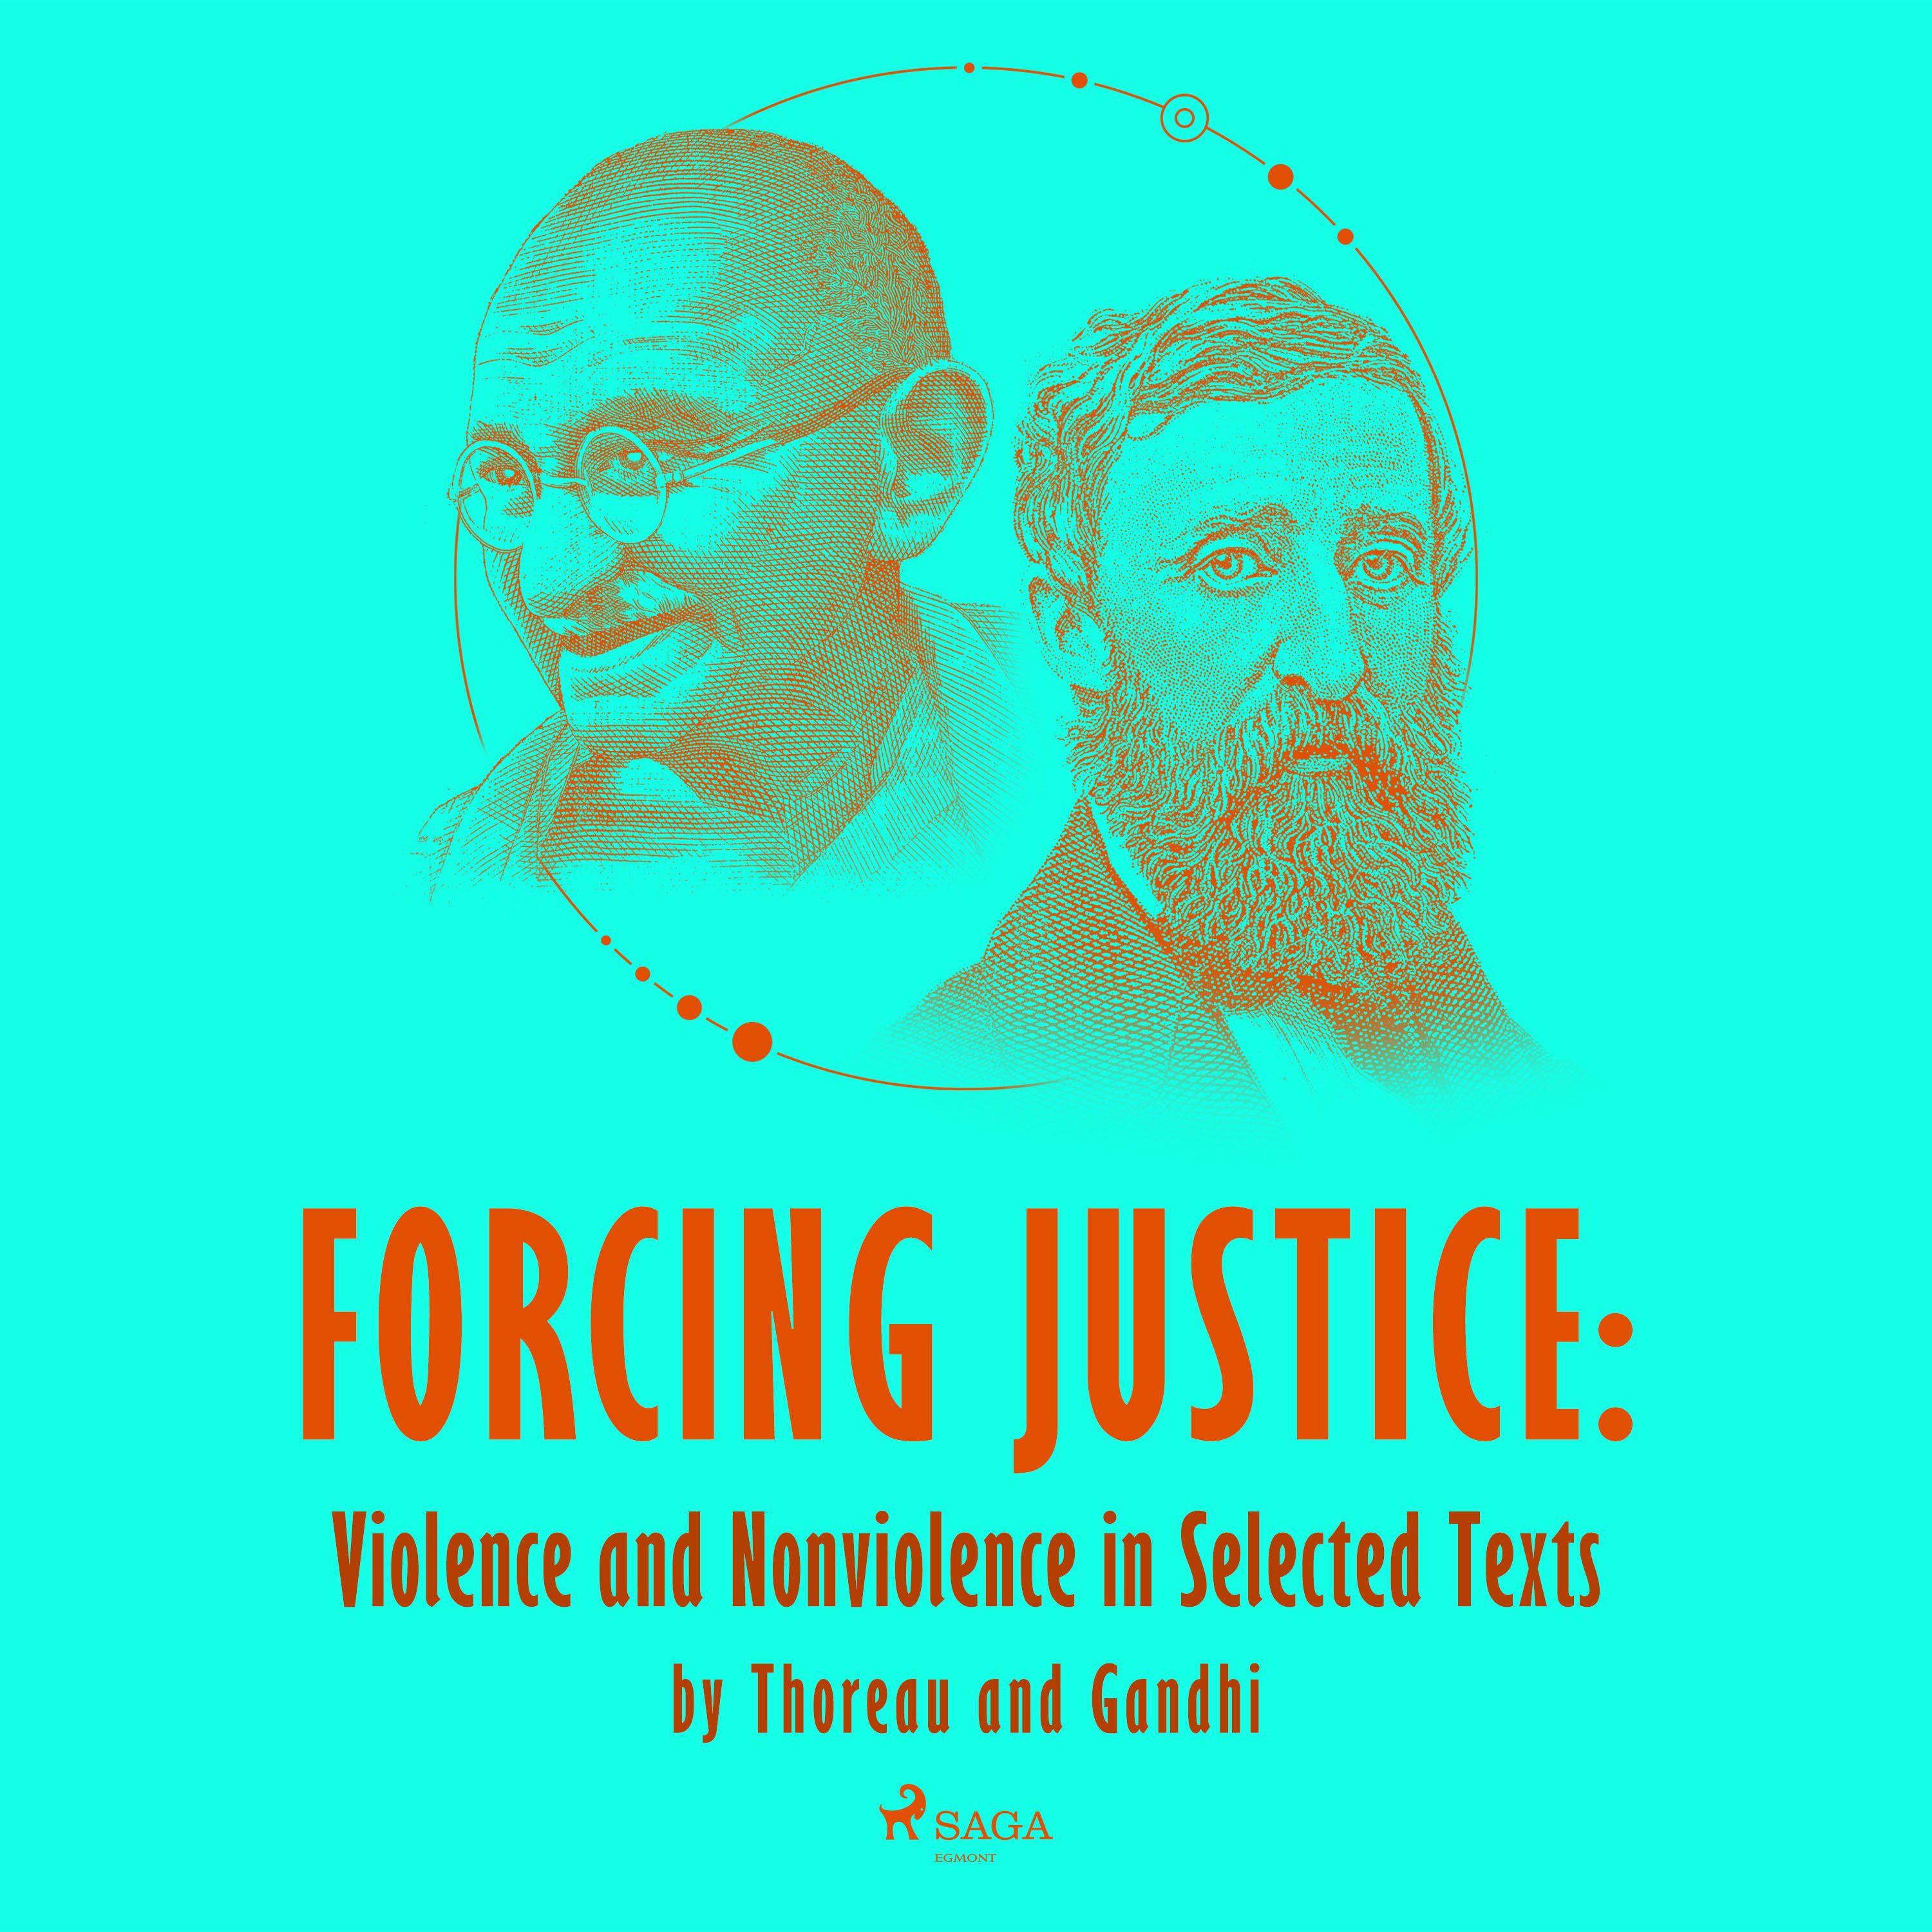 Forcing Justice: Violence and Nonviolence in Selected Texts by Thoreau and Gandhi, ljudbok av Mahatma Gandhi, Henry David Thoreau